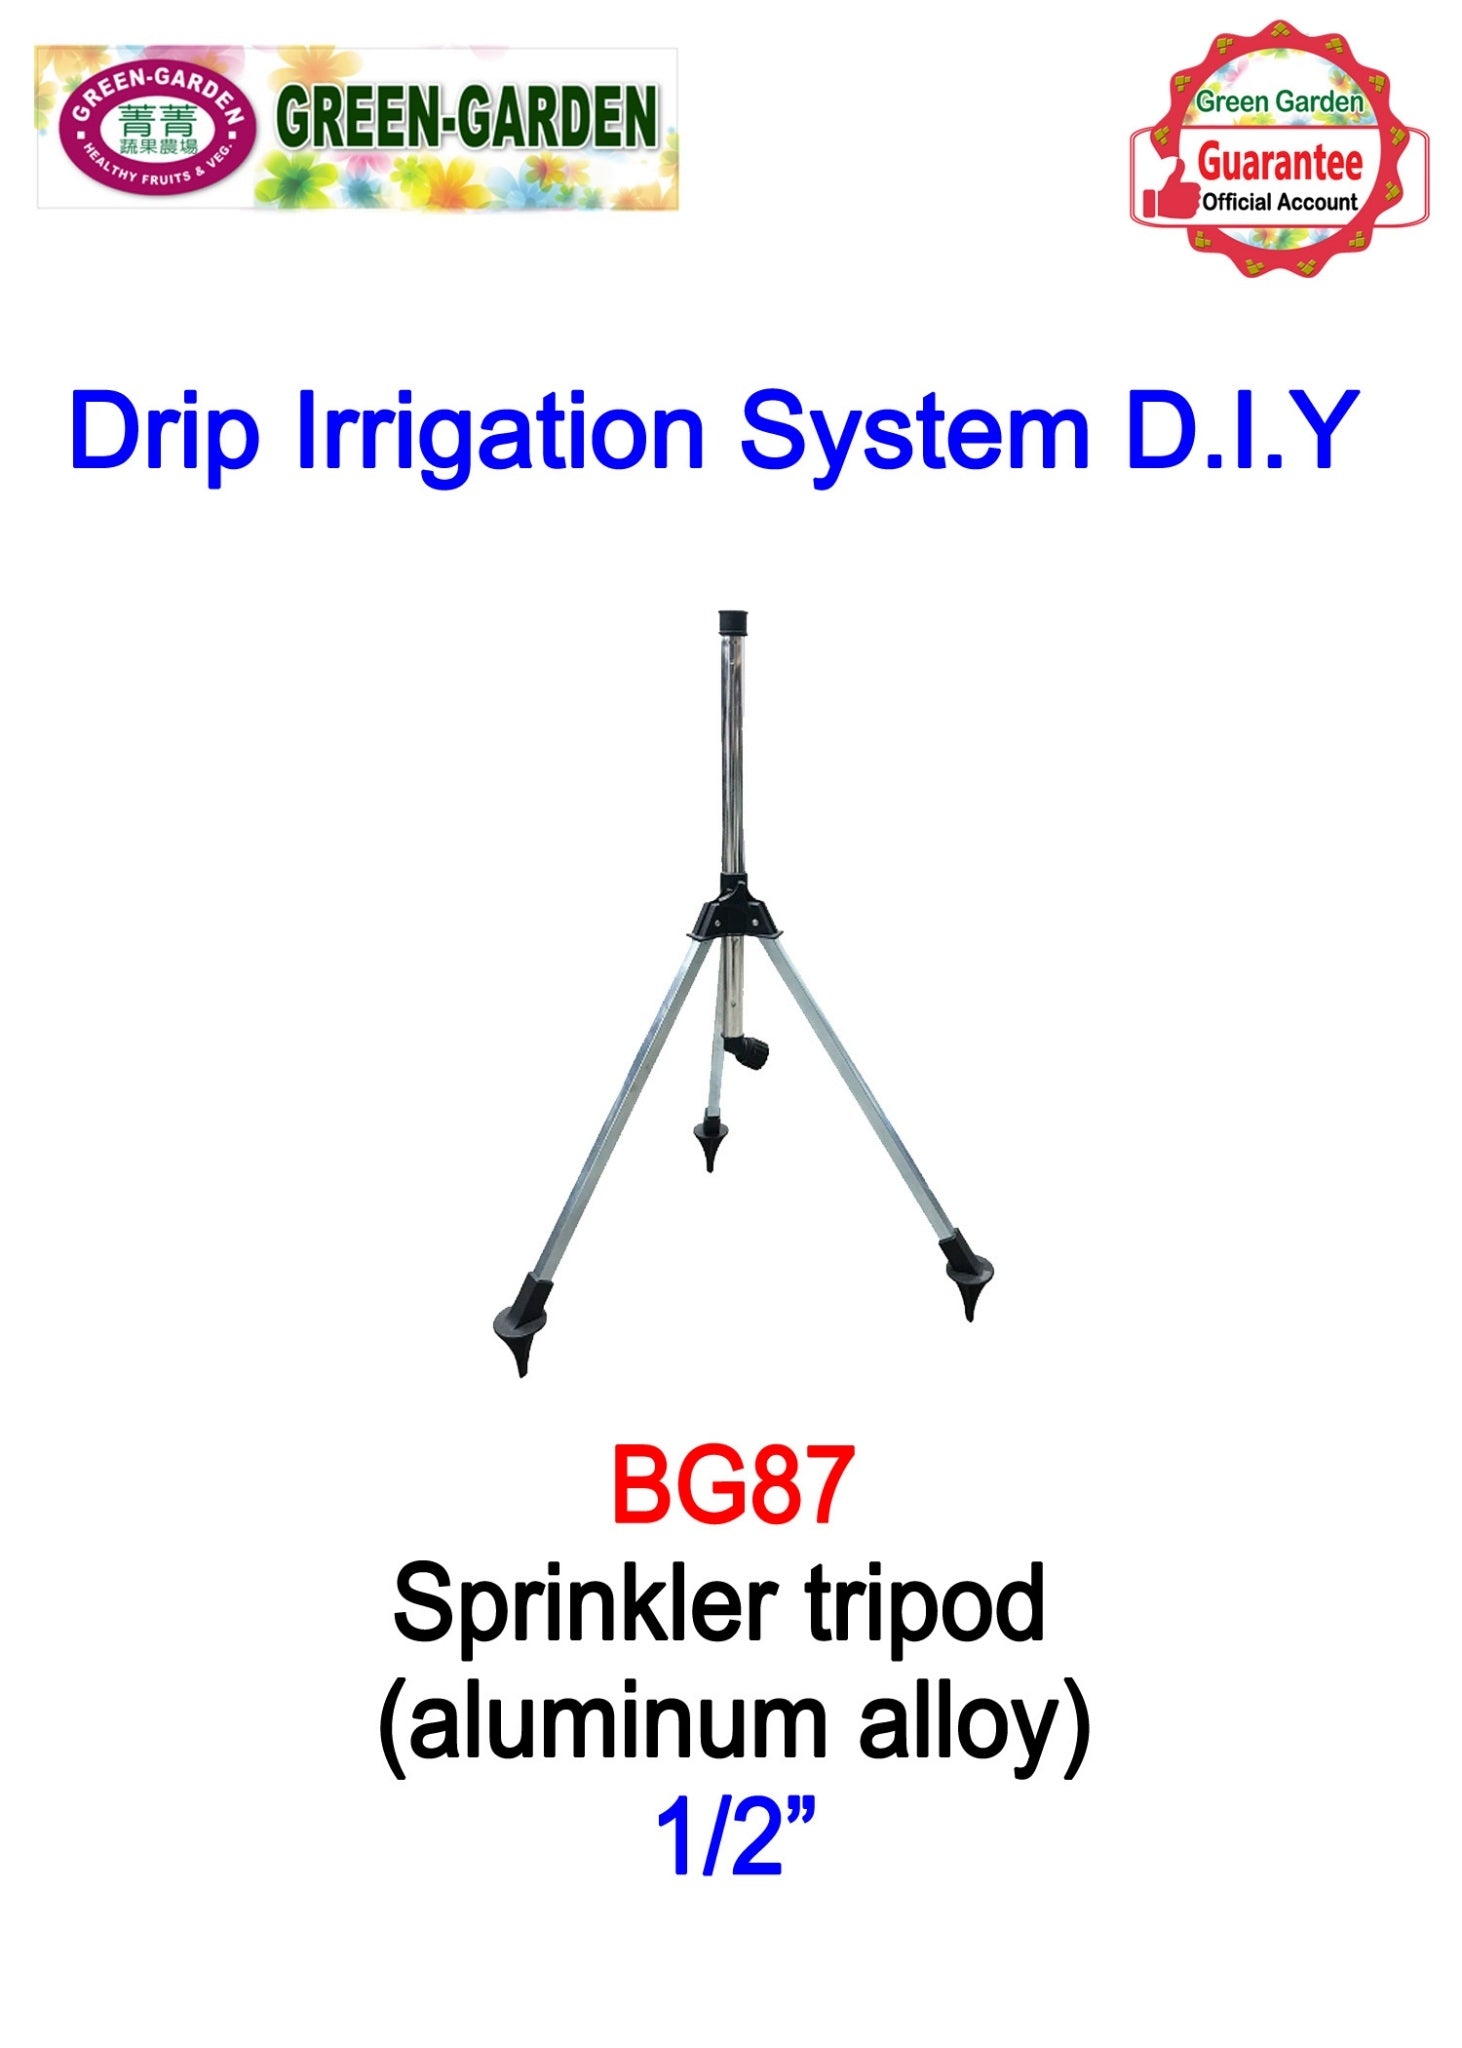 Drip Irrigation System - 1/2" sprinkler tripod (aluminum alloy) BG87